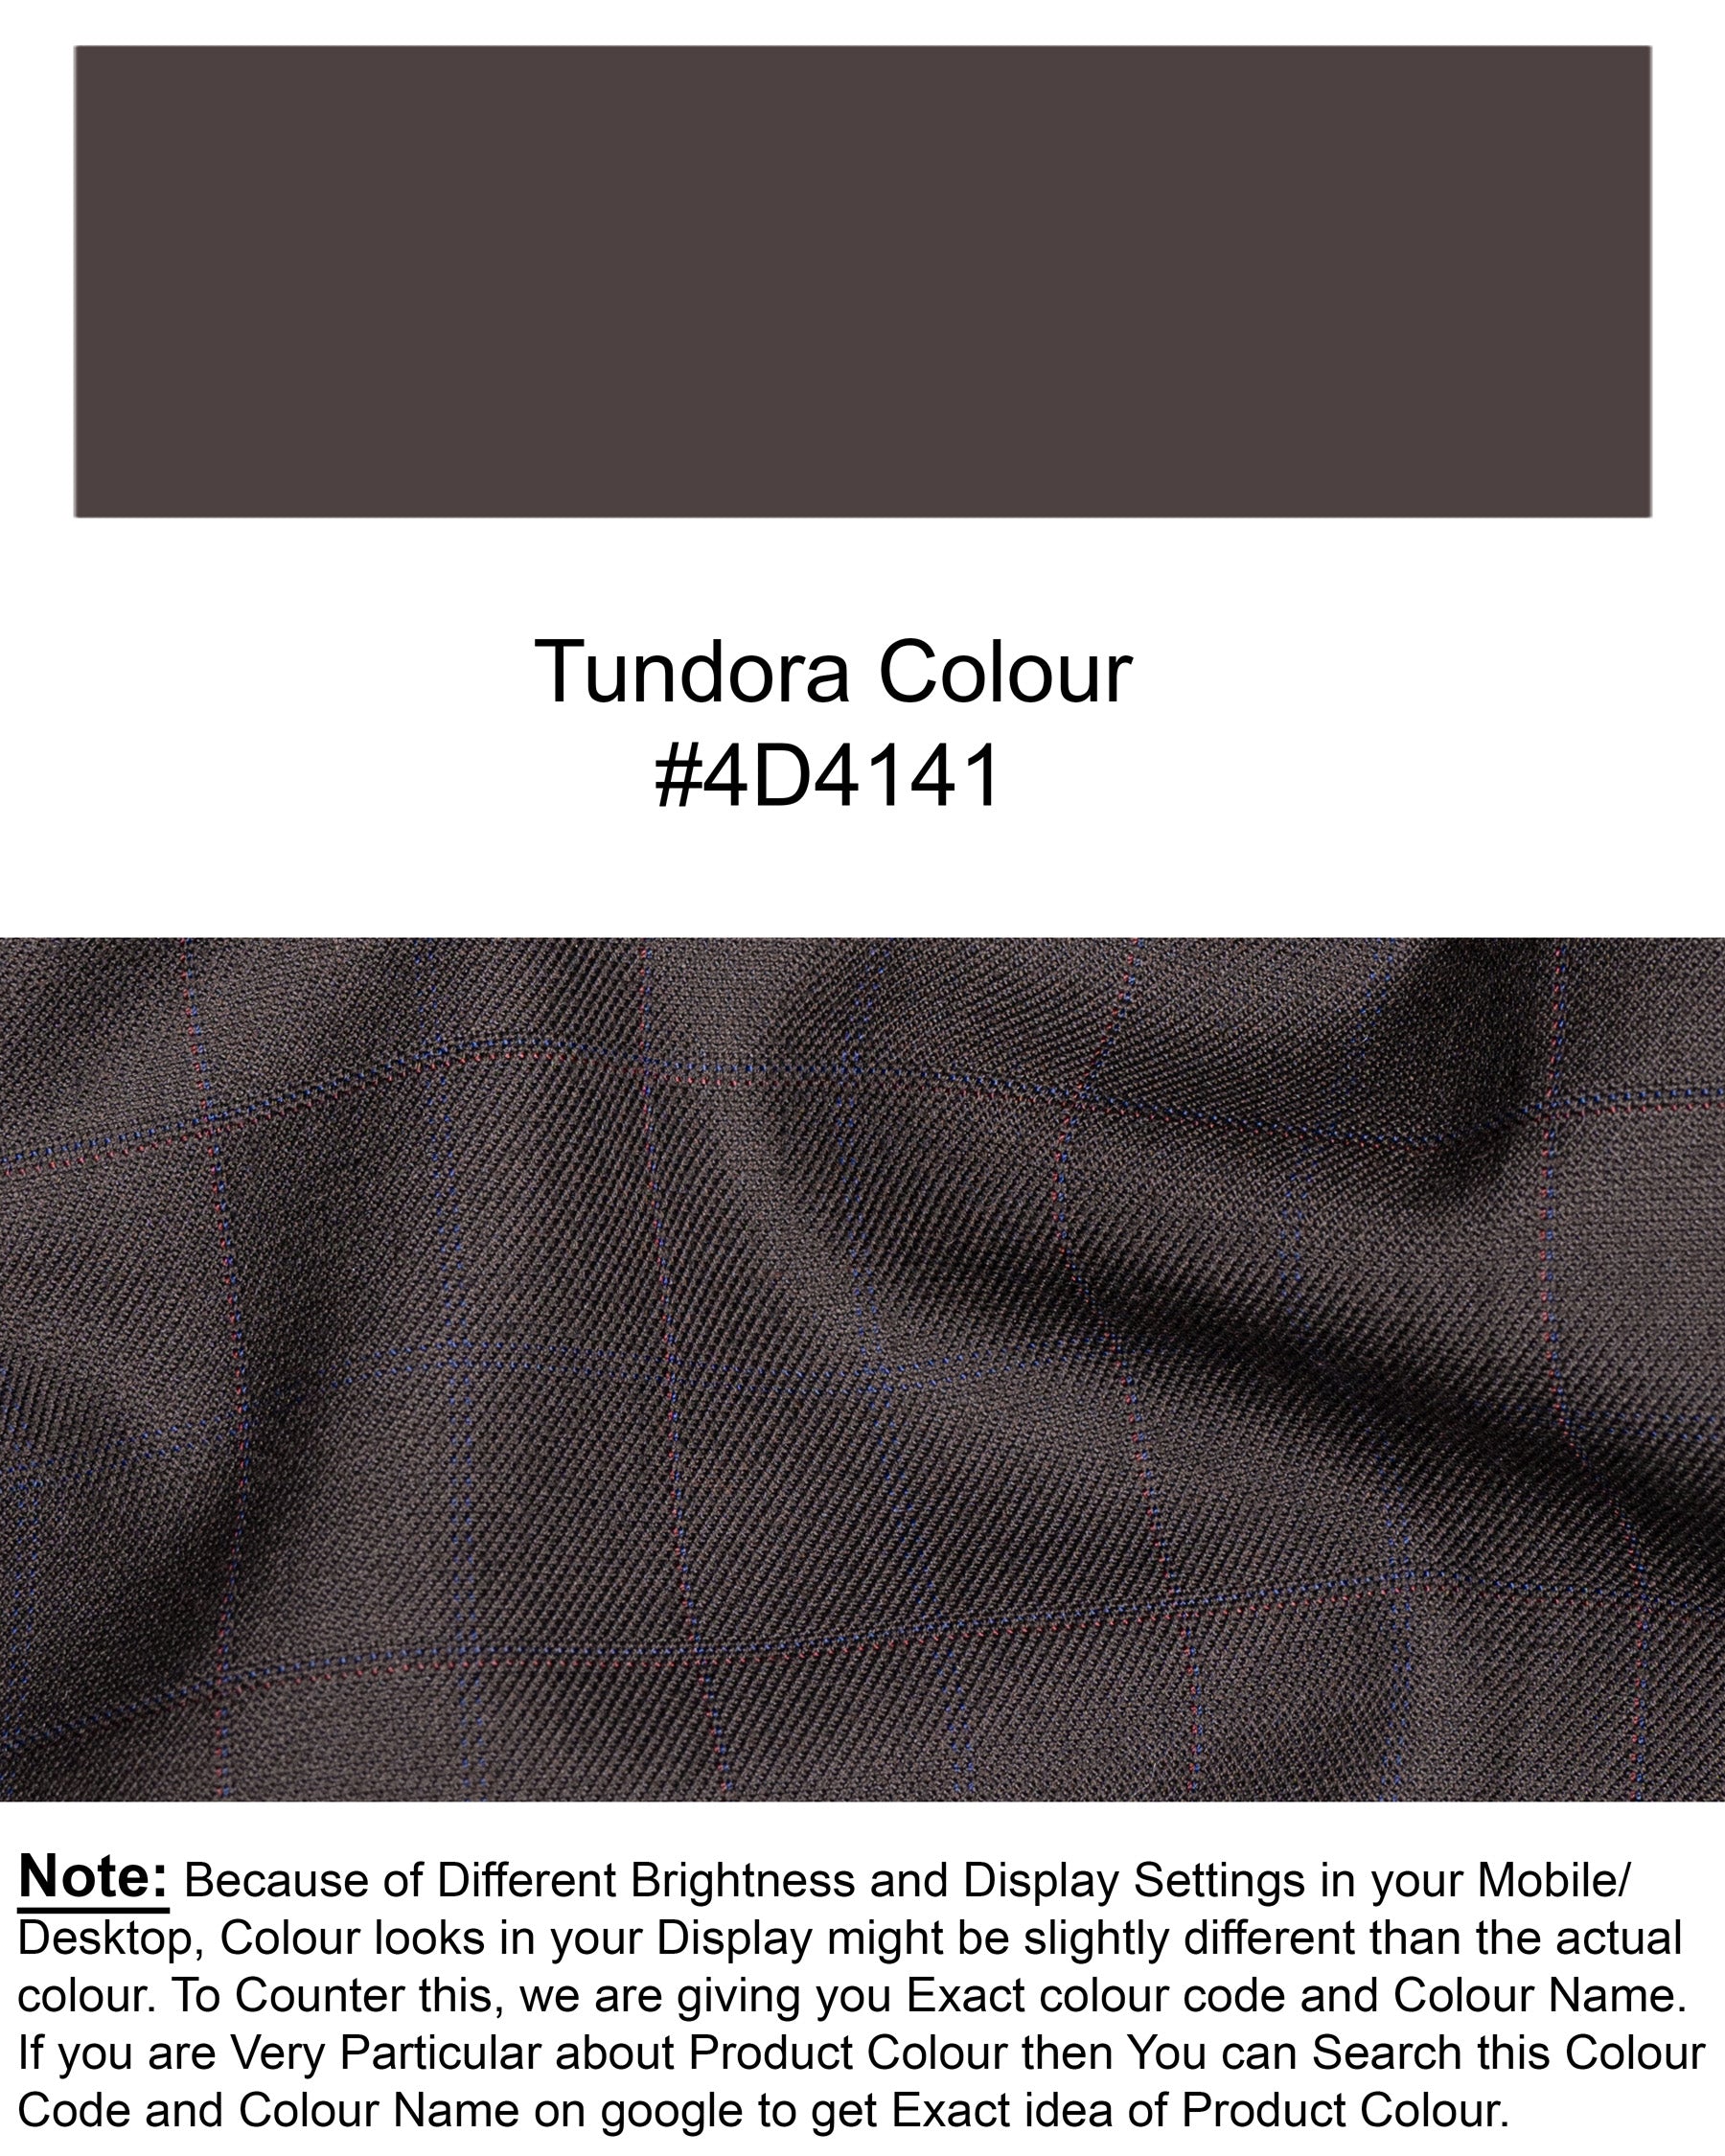 Tundora Brown Subtle Windowpane Double Breasted Wool Rich Suit ST1421-DB-GB-36, ST1421-DB-GB-38, ST1421-DB-GB-40, ST1421-DB-GB-42, ST1421-DB-GB-44, ST1421-DB-GB-46, ST1421-DB-GB-48, ST1421-DB-GB-50, ST1421-DB-GB-52, ST1421-DB-GB-54, ST1421-DB-GB-56, ST1421-DB-GB-58, ST1421-DB-GB-60